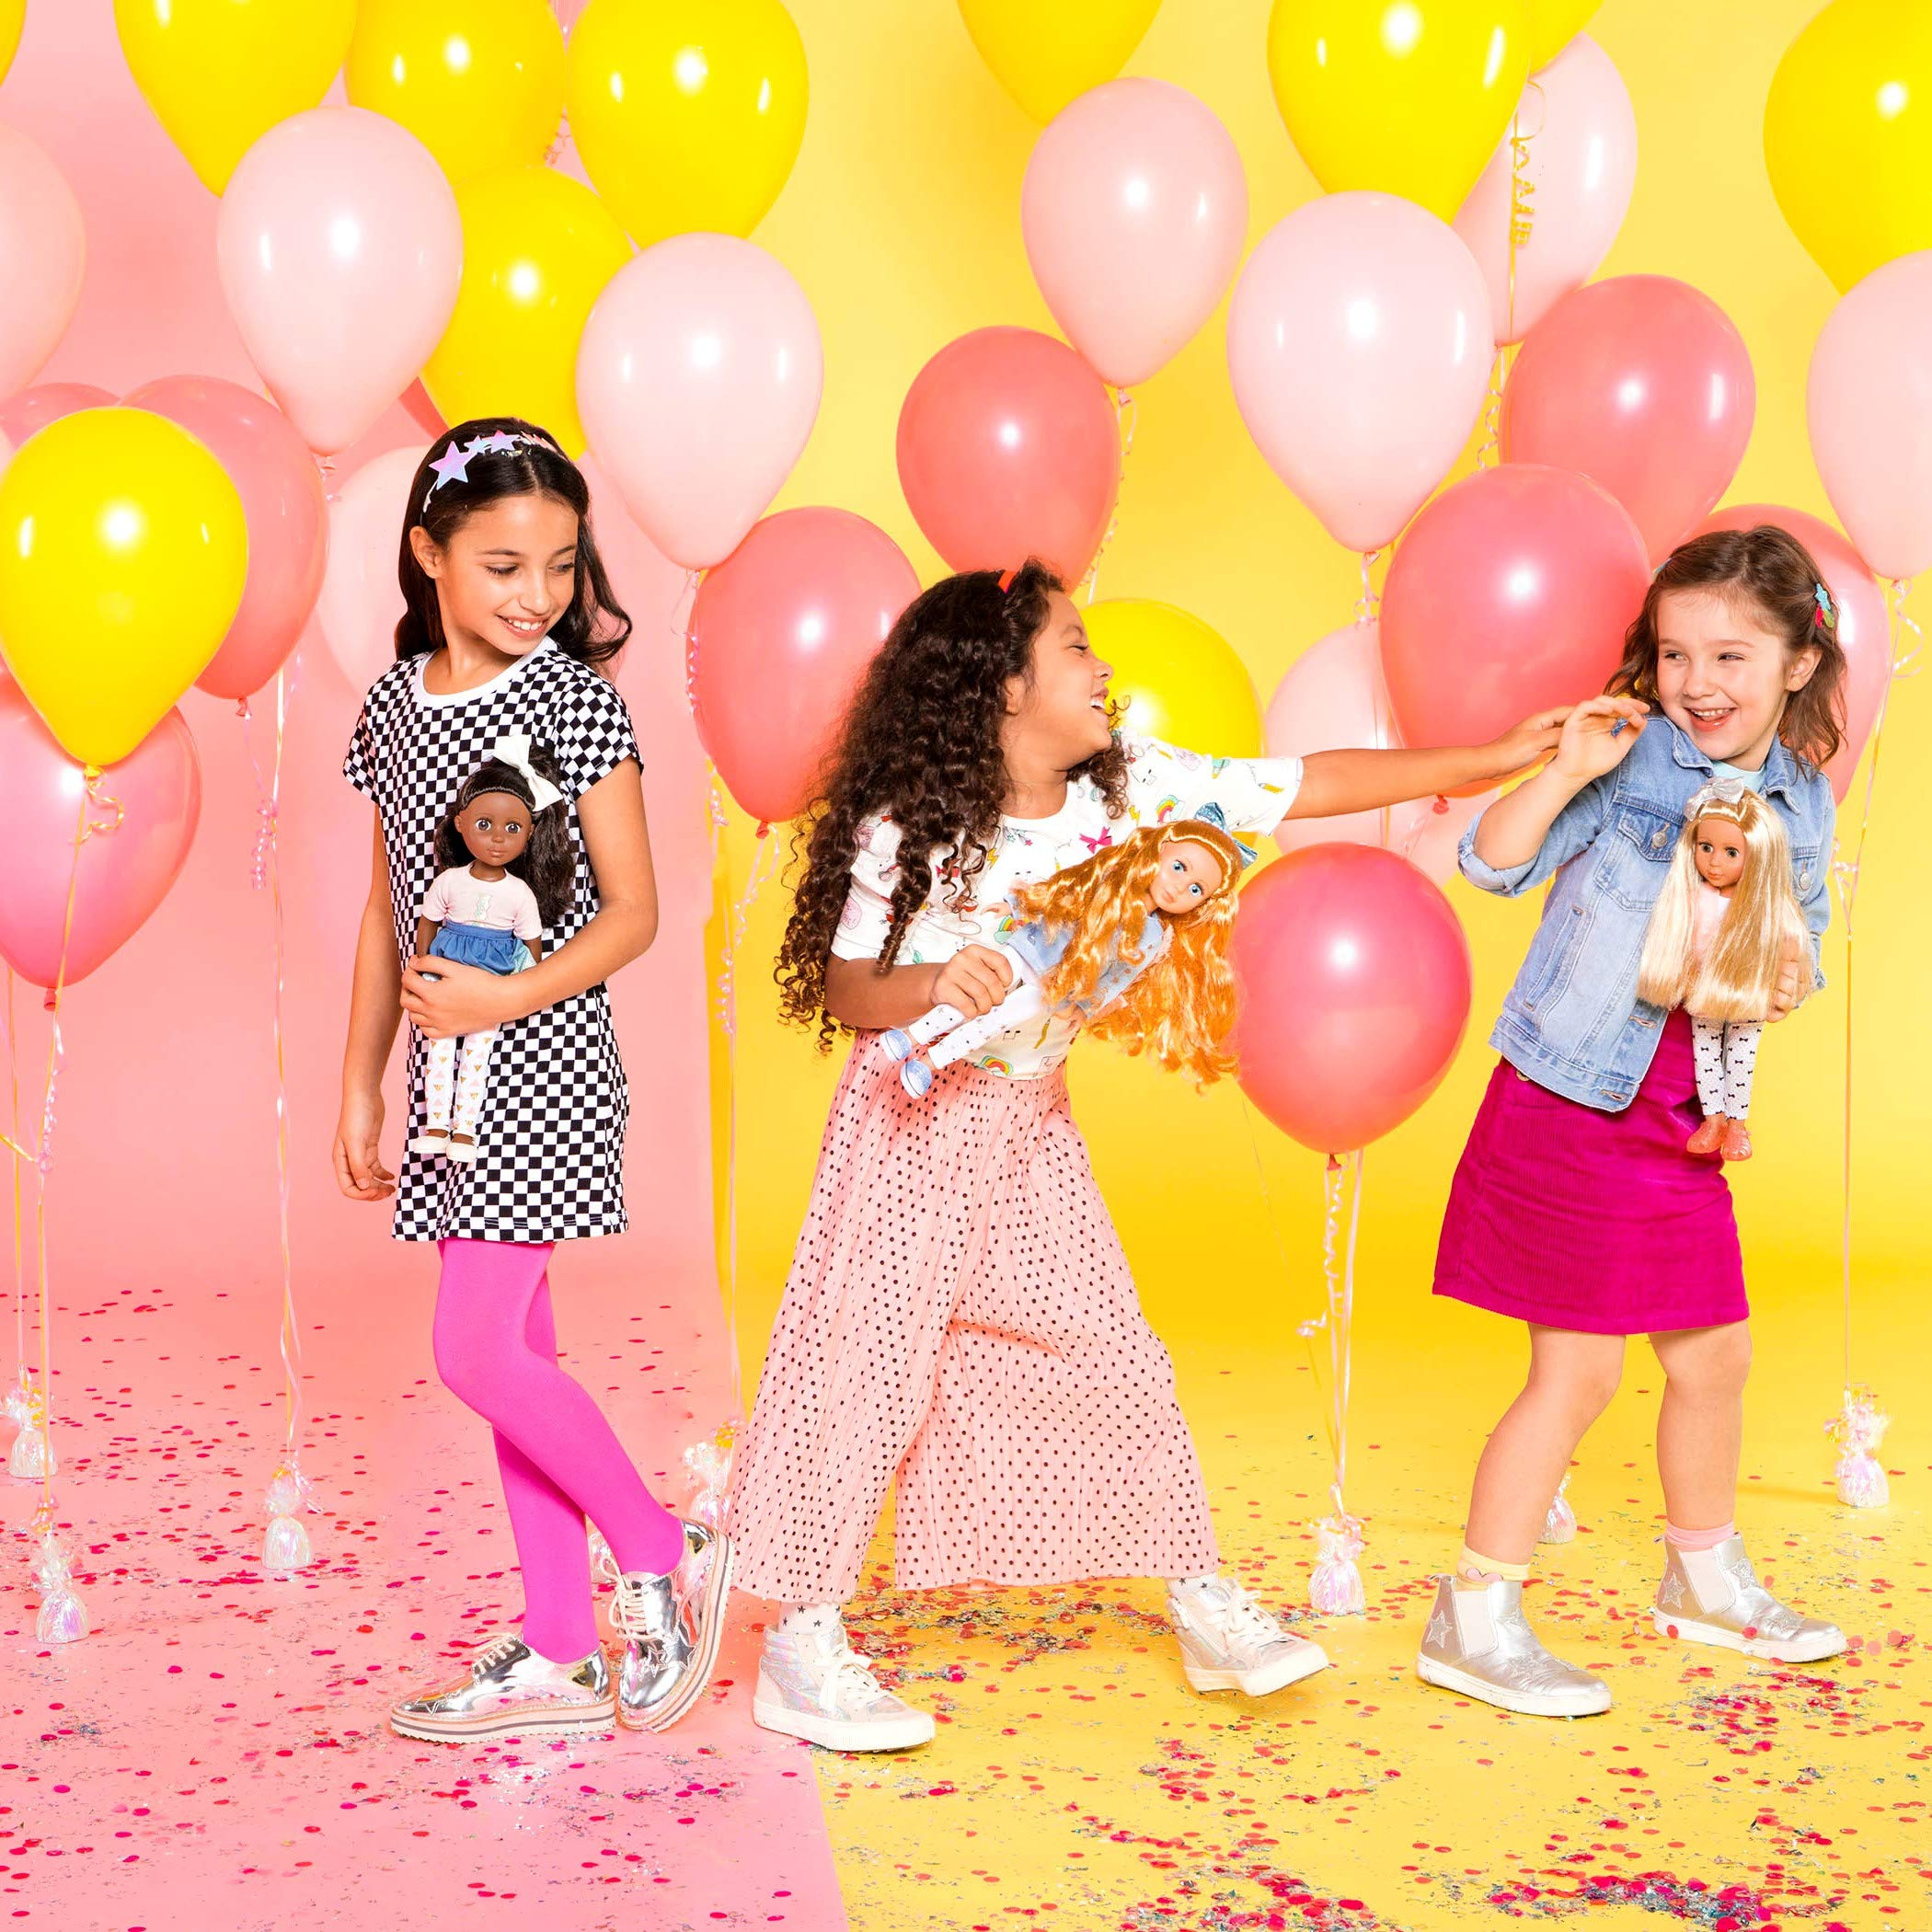 Glitter Girls - Fifer 14-inch Poseable Fashion Doll - Dolls for Girls Age 3 & Up